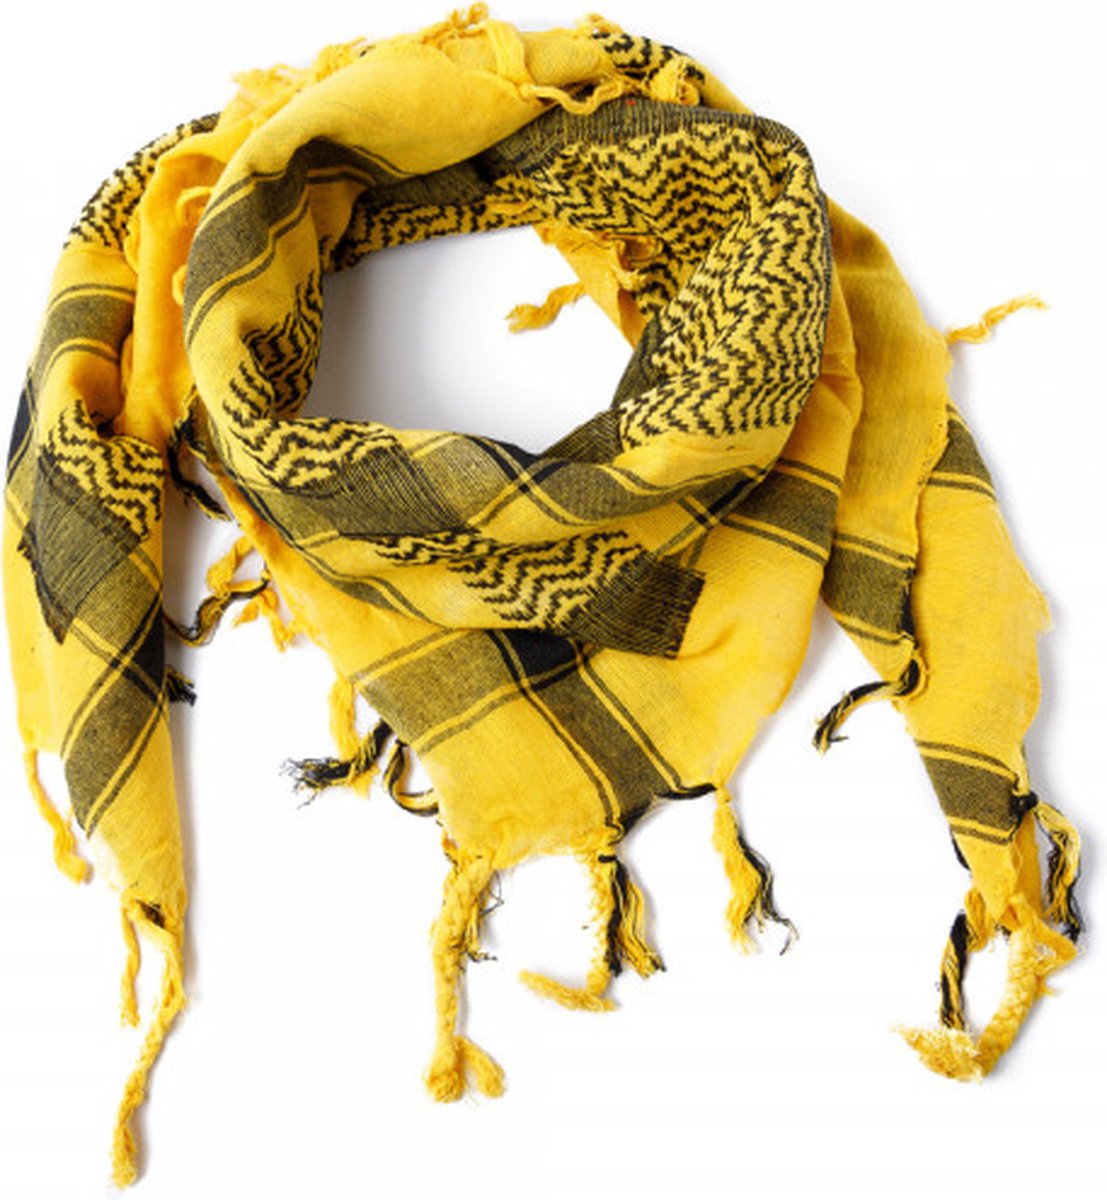 Kufiya - Originele Arafat sjaal - PLO sjaal - Shemagh - Palestijnse sjaal - Geel Met Zwart - Pali Doek - Hoog Kwaliteit